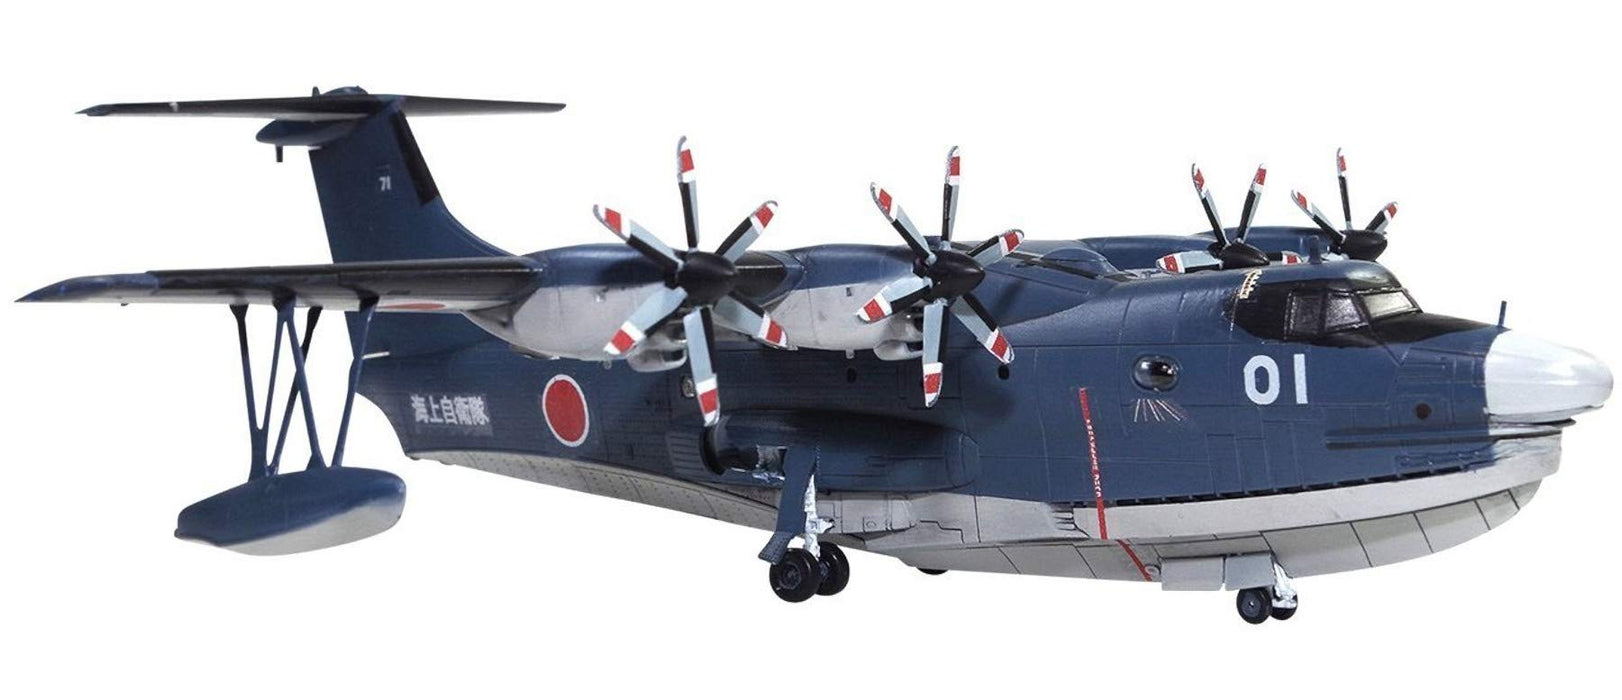 Qingdao Bunka Kyozai 1/144 Aircraft Maritime Self-Defense Force Rescue Amphibian Us-2 Plastic Model